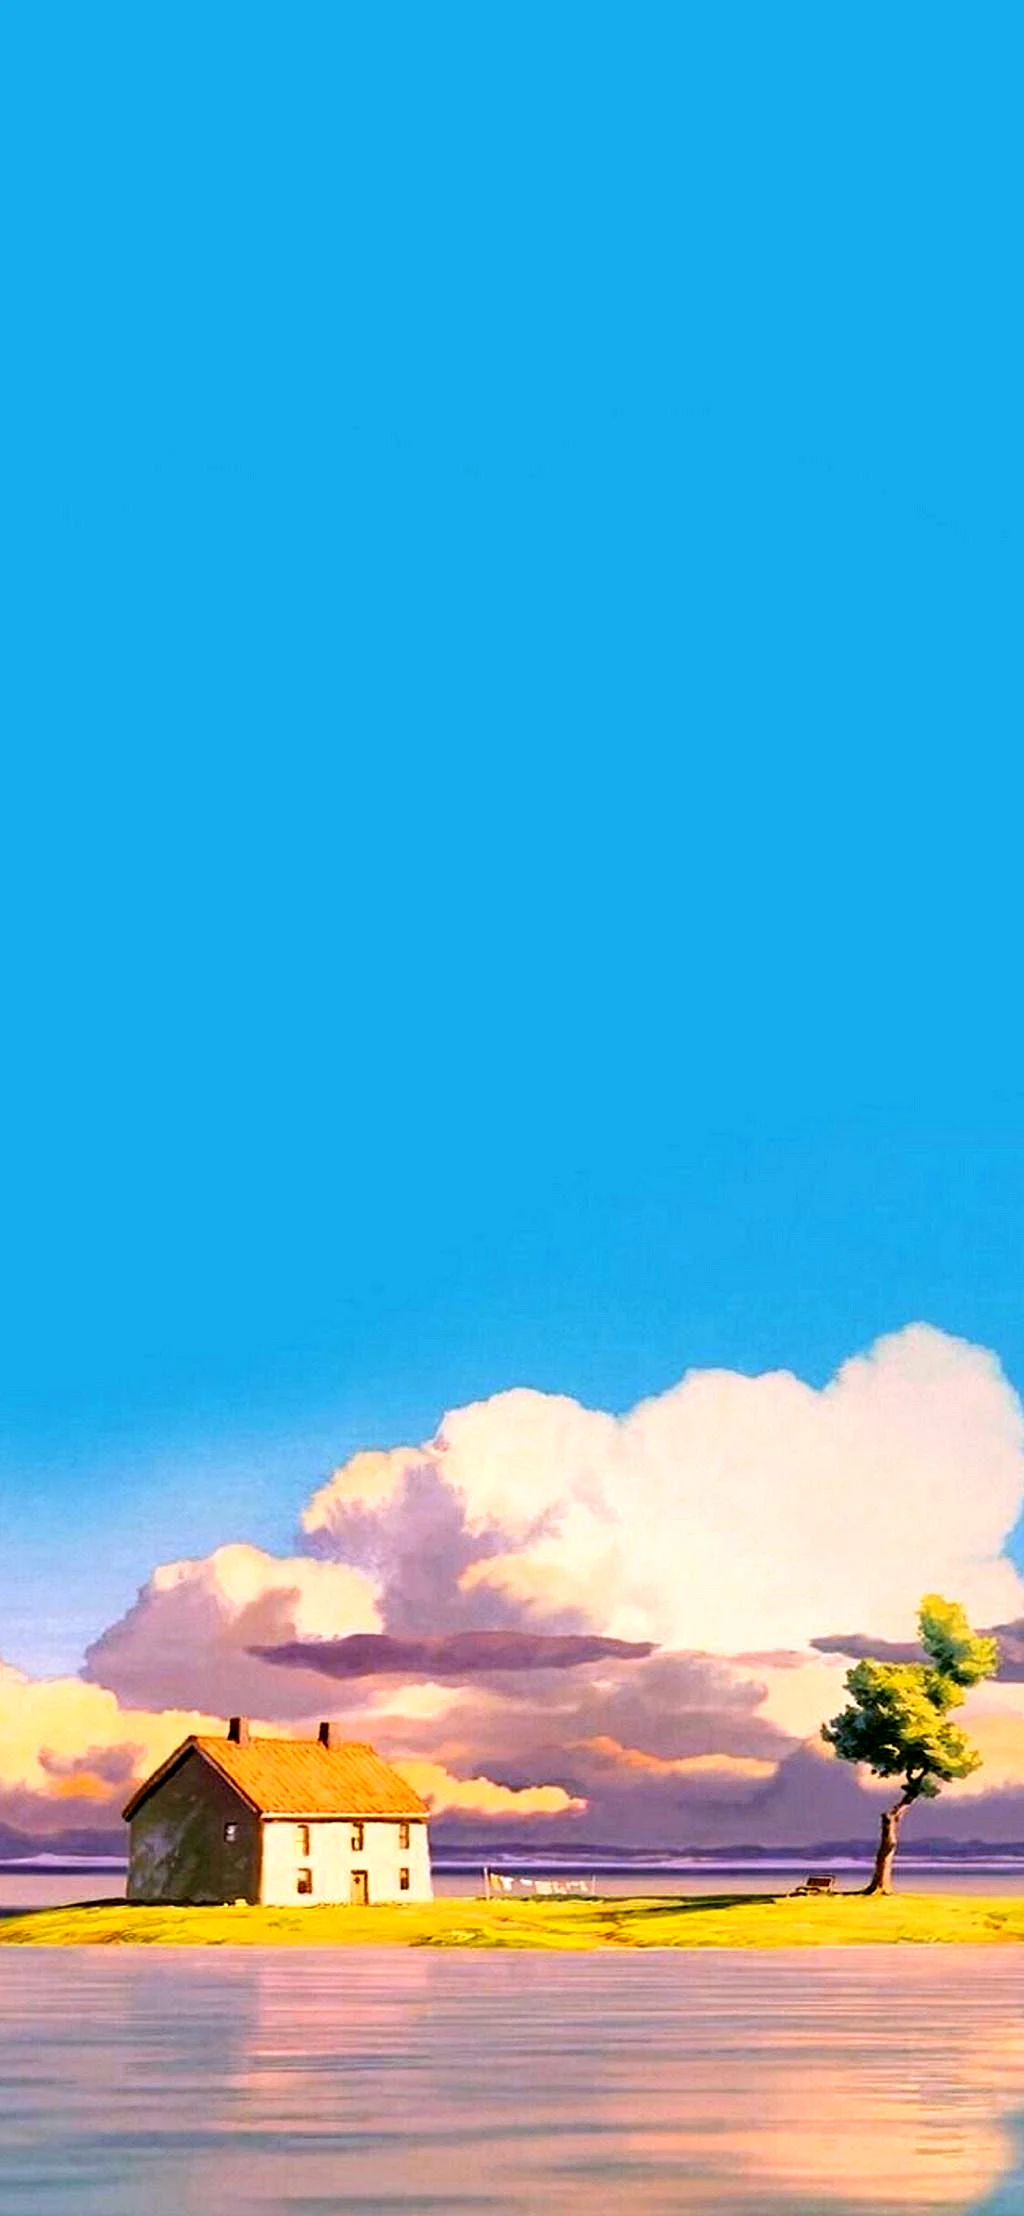 Hayao Miyazaki Anime Landscape Wallpaper For iPhone